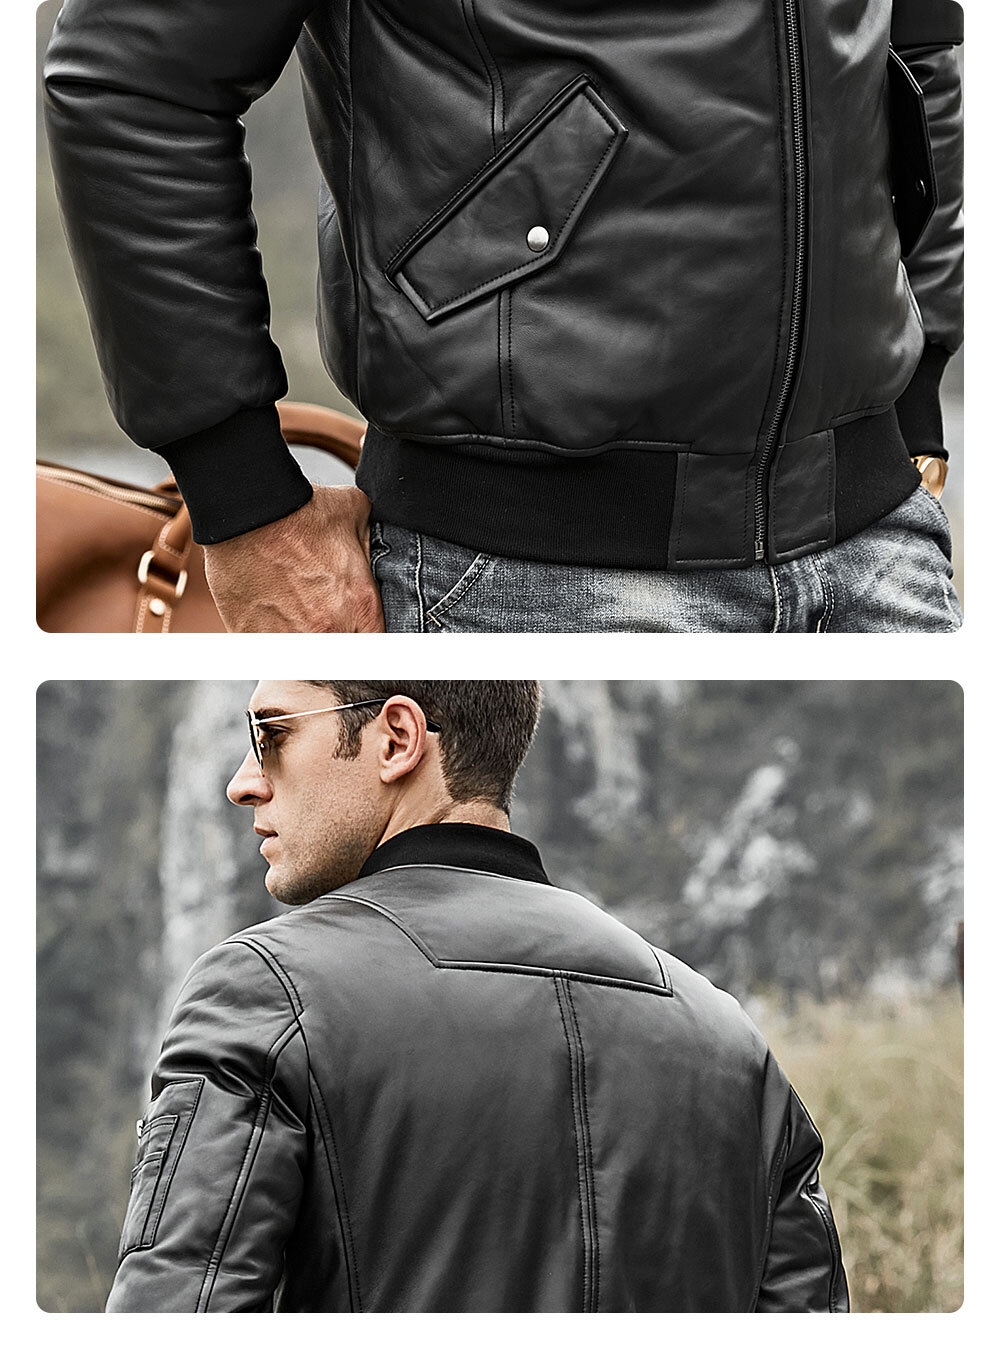 Men's Lambskin Leather Bomber Jacket Black 202 100% polyester lambskin leather bomber jacket| 100% polyester lambskin leather bomber jacket brands